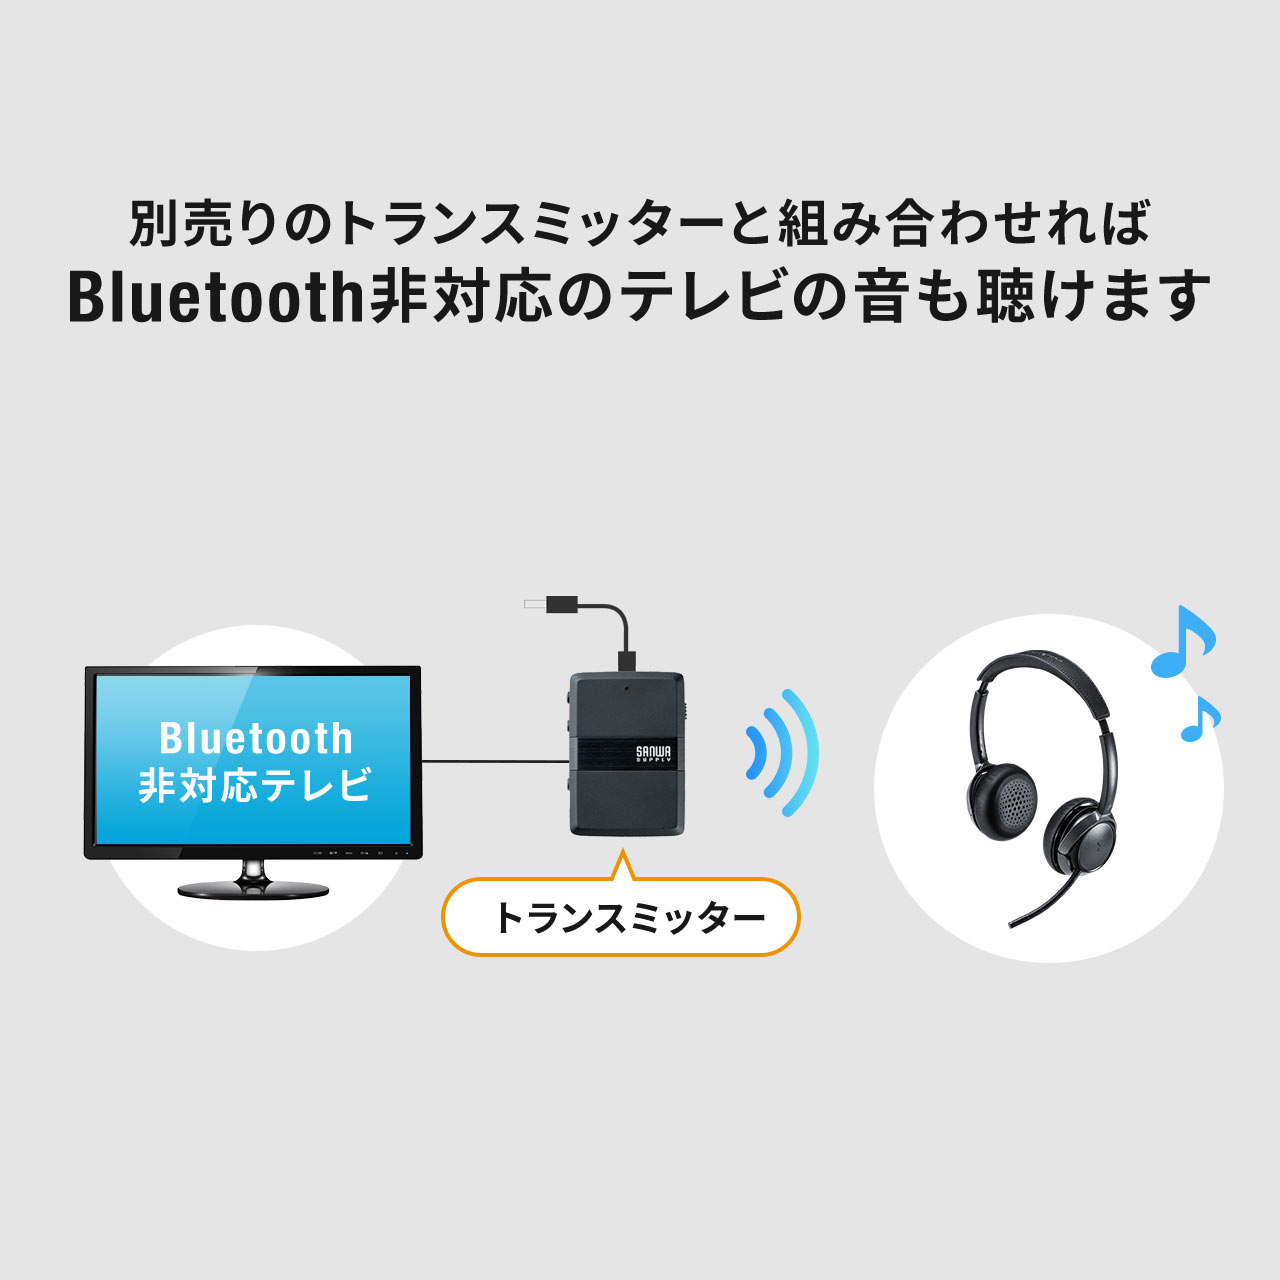 Bluetoothwbhz+gX~b^[Zbg 400-BTSH018BK~2 400-BTAD011~1 402-BTSH018SET4